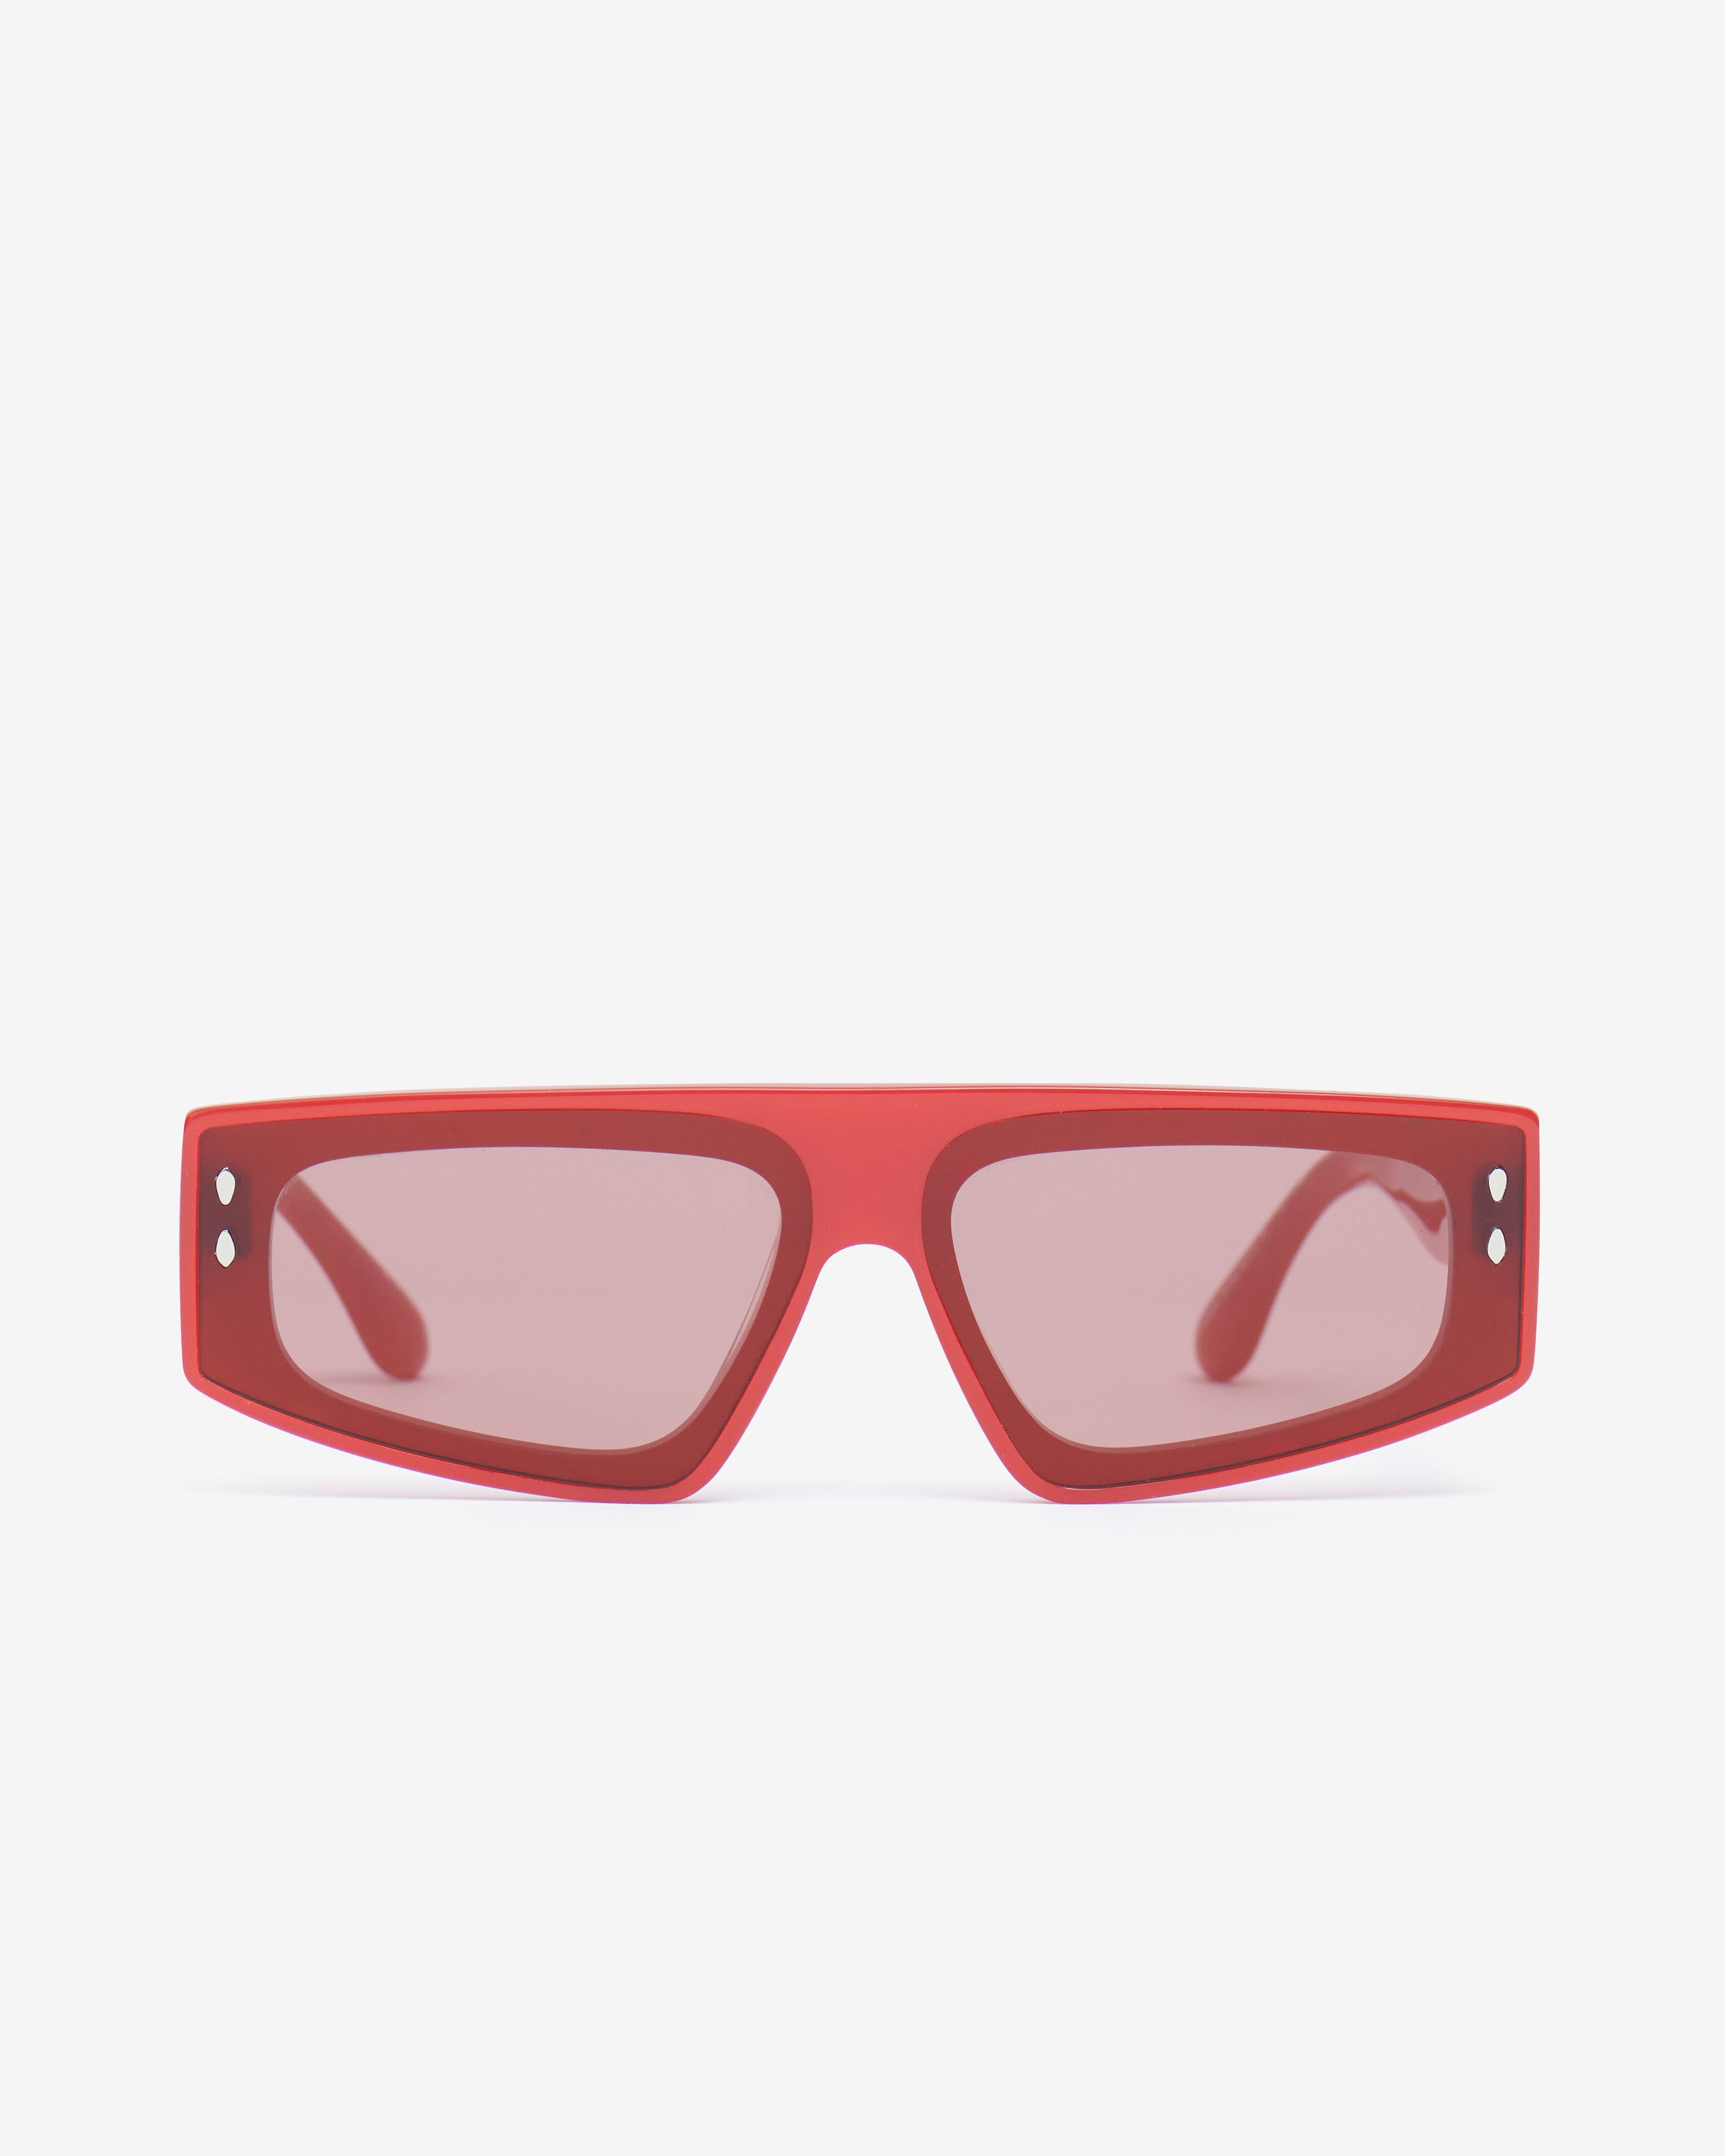 Zoomy sunglasses Woman Pearled red-burgundy 2